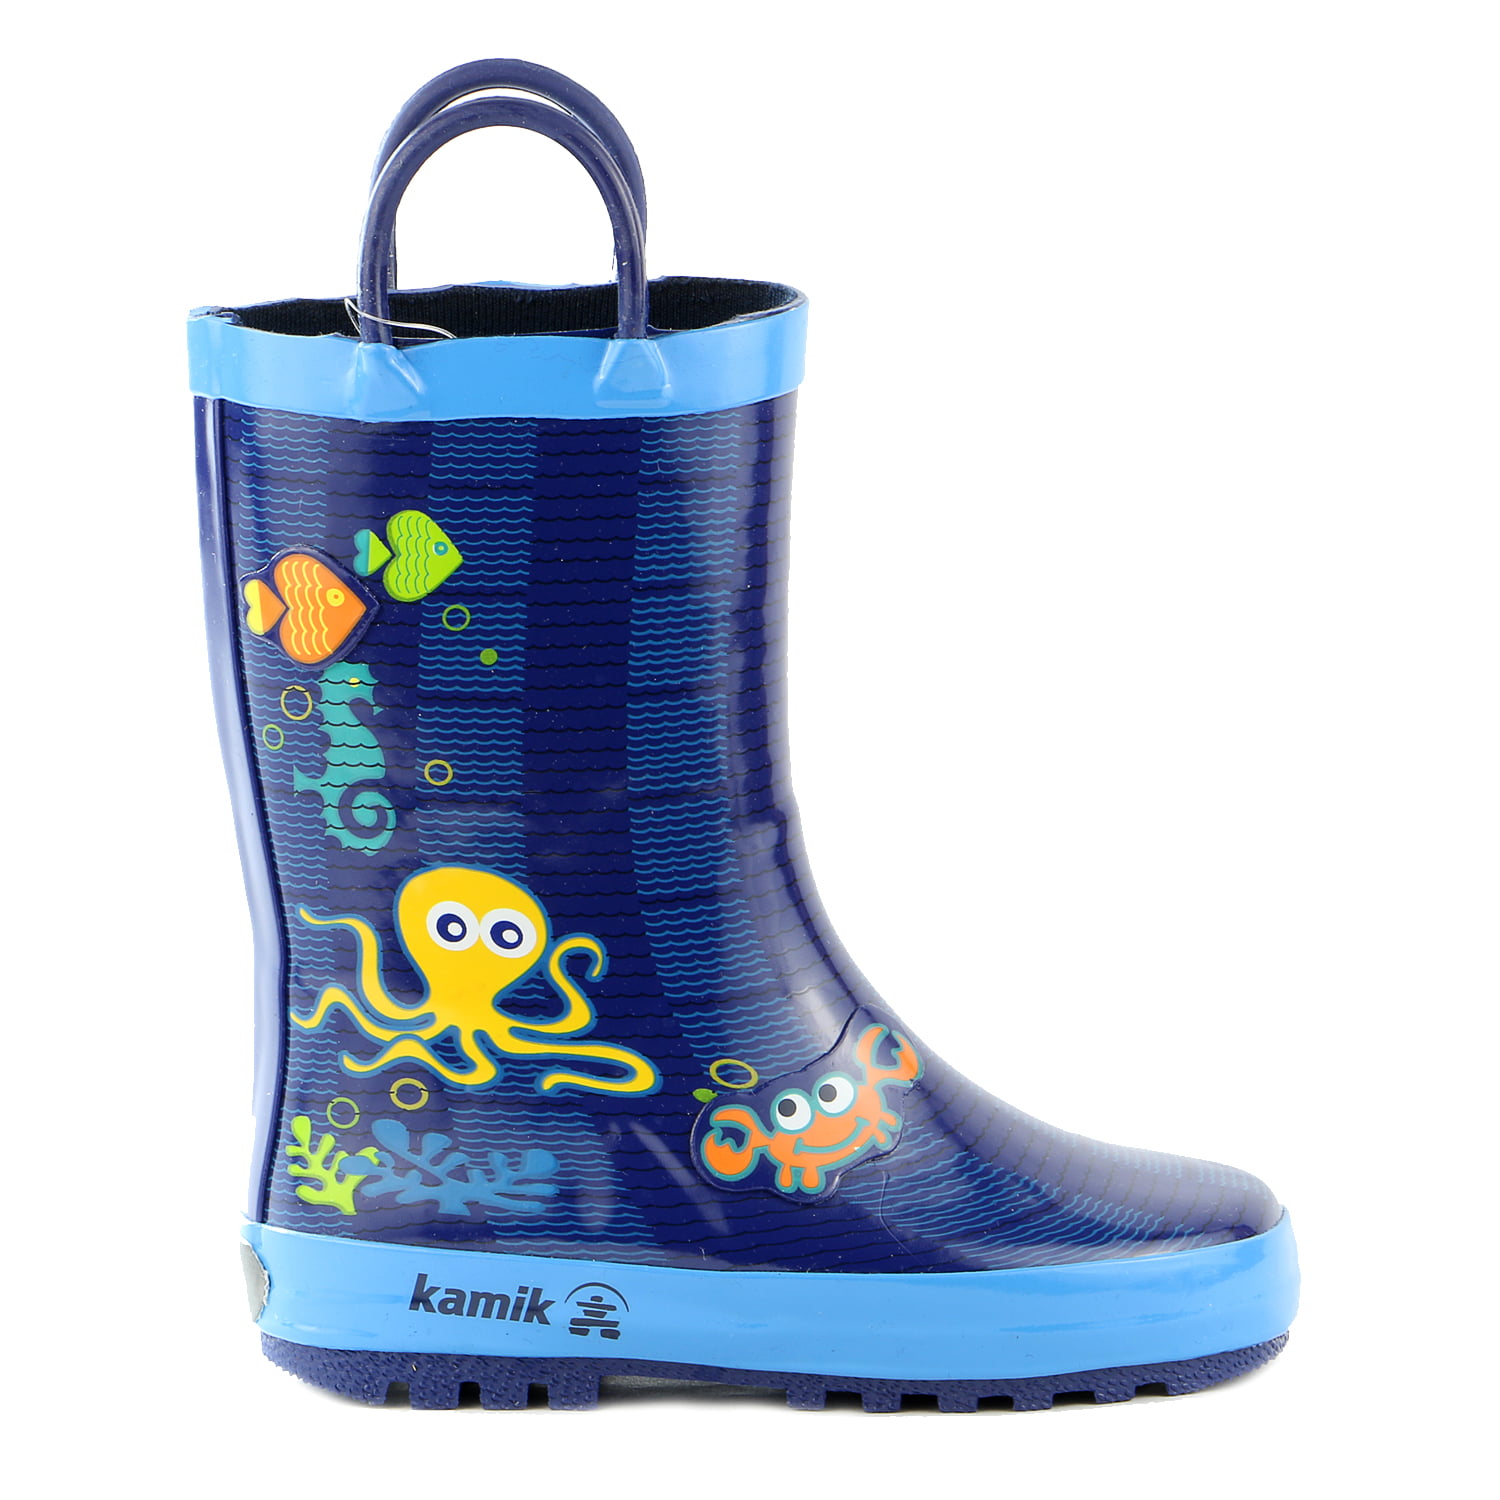 rain boots boys walmart